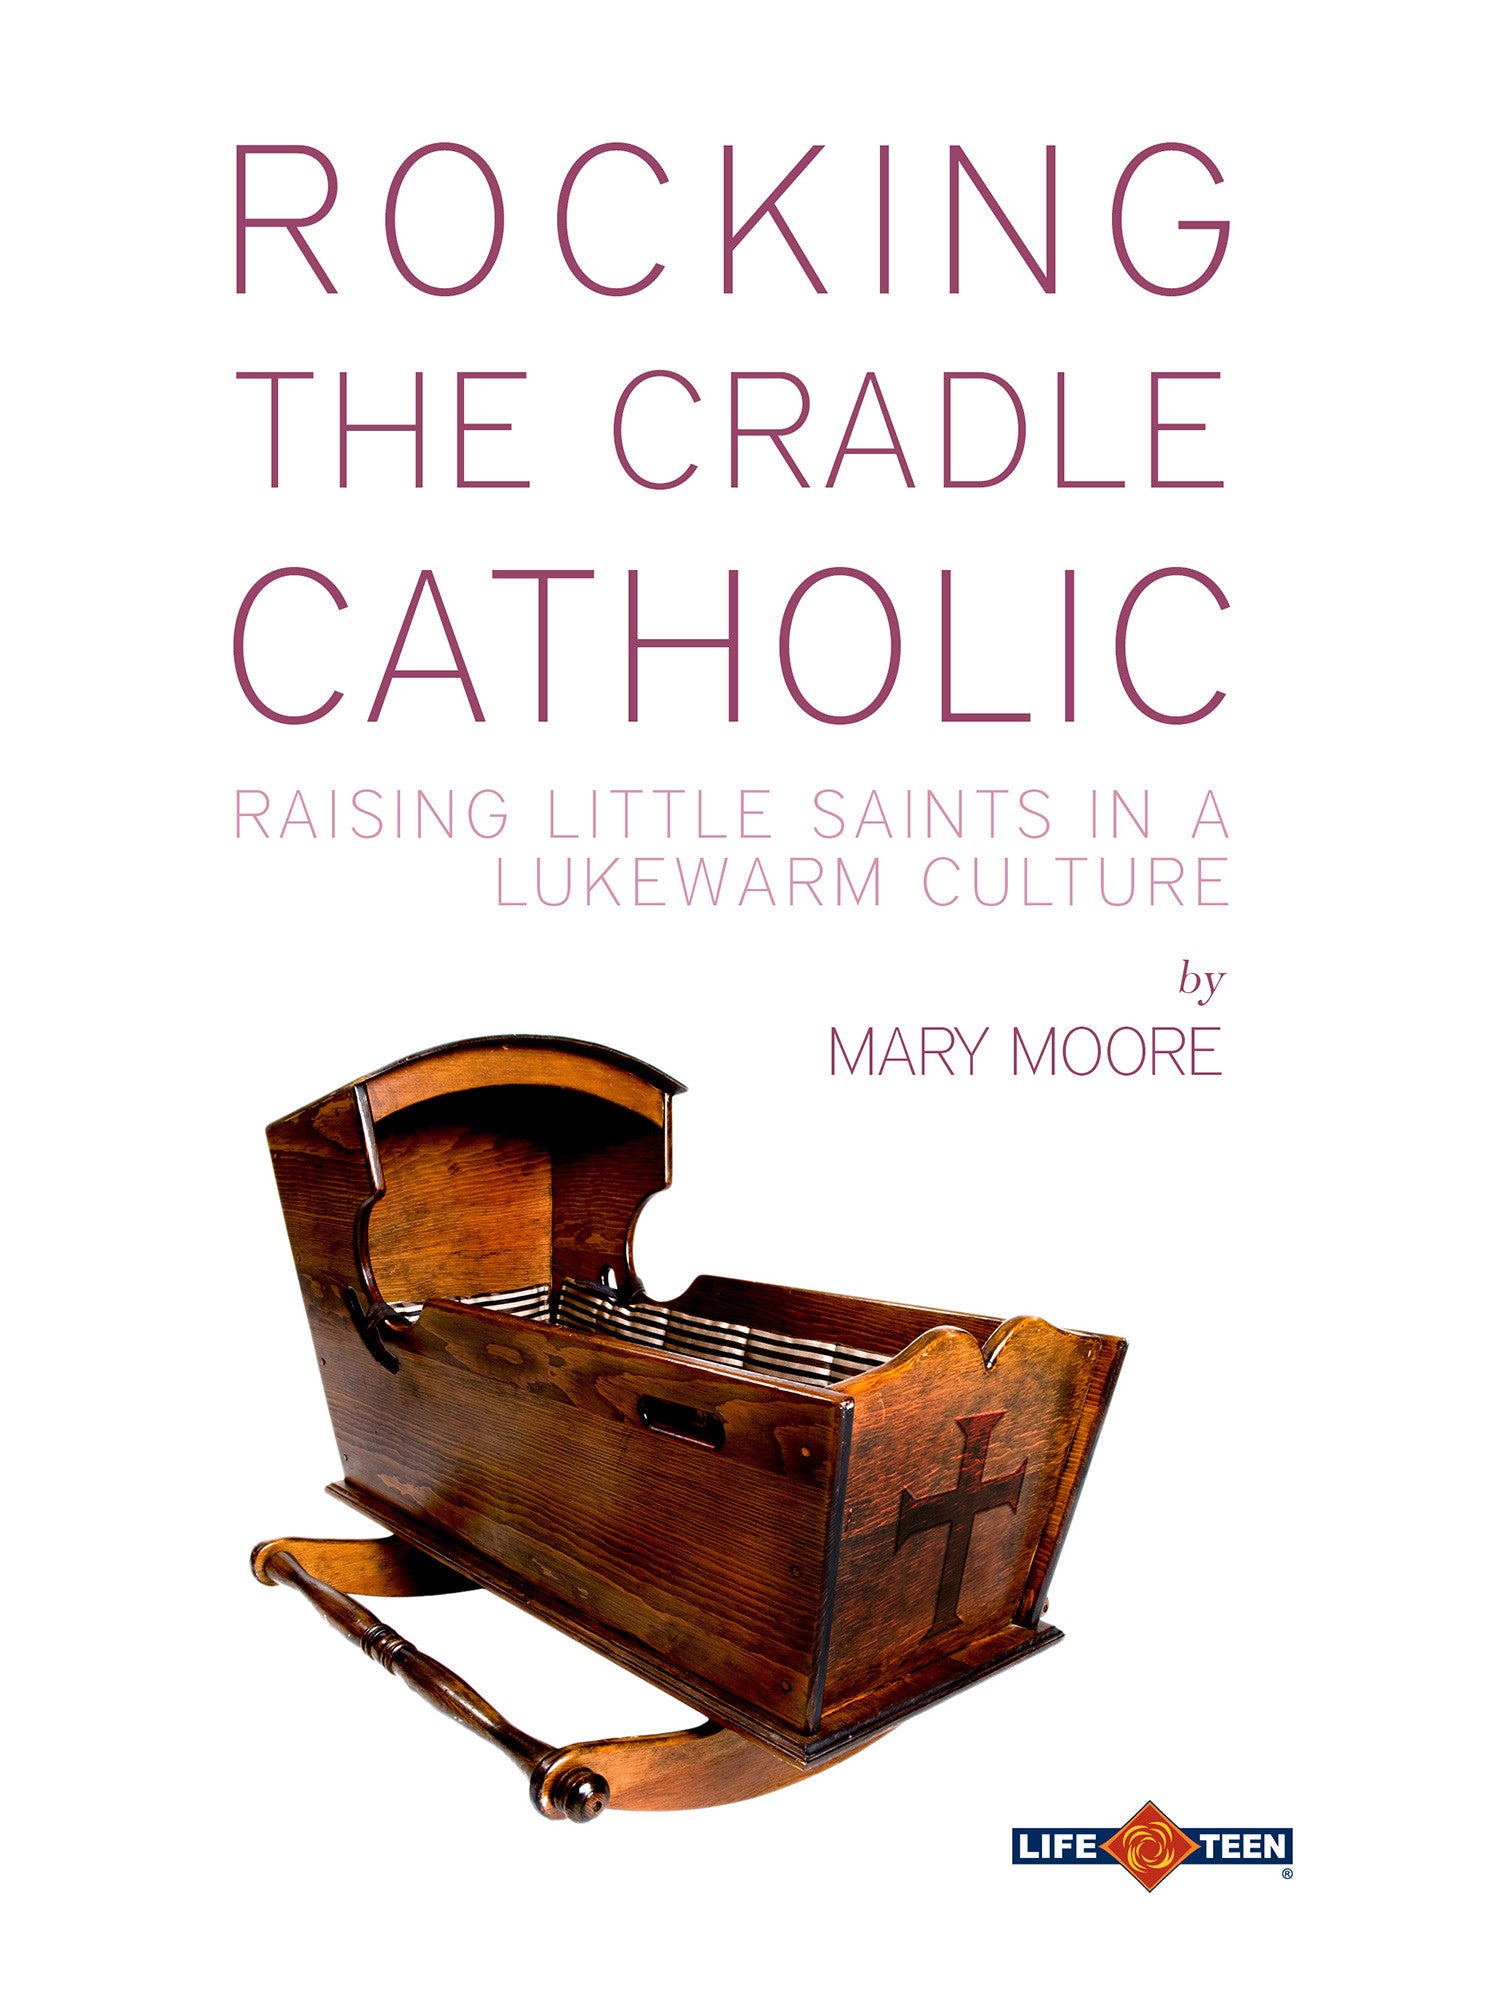 Rocking the Cradle Catholic: Raising Little Saints in a Lukewarm Culture